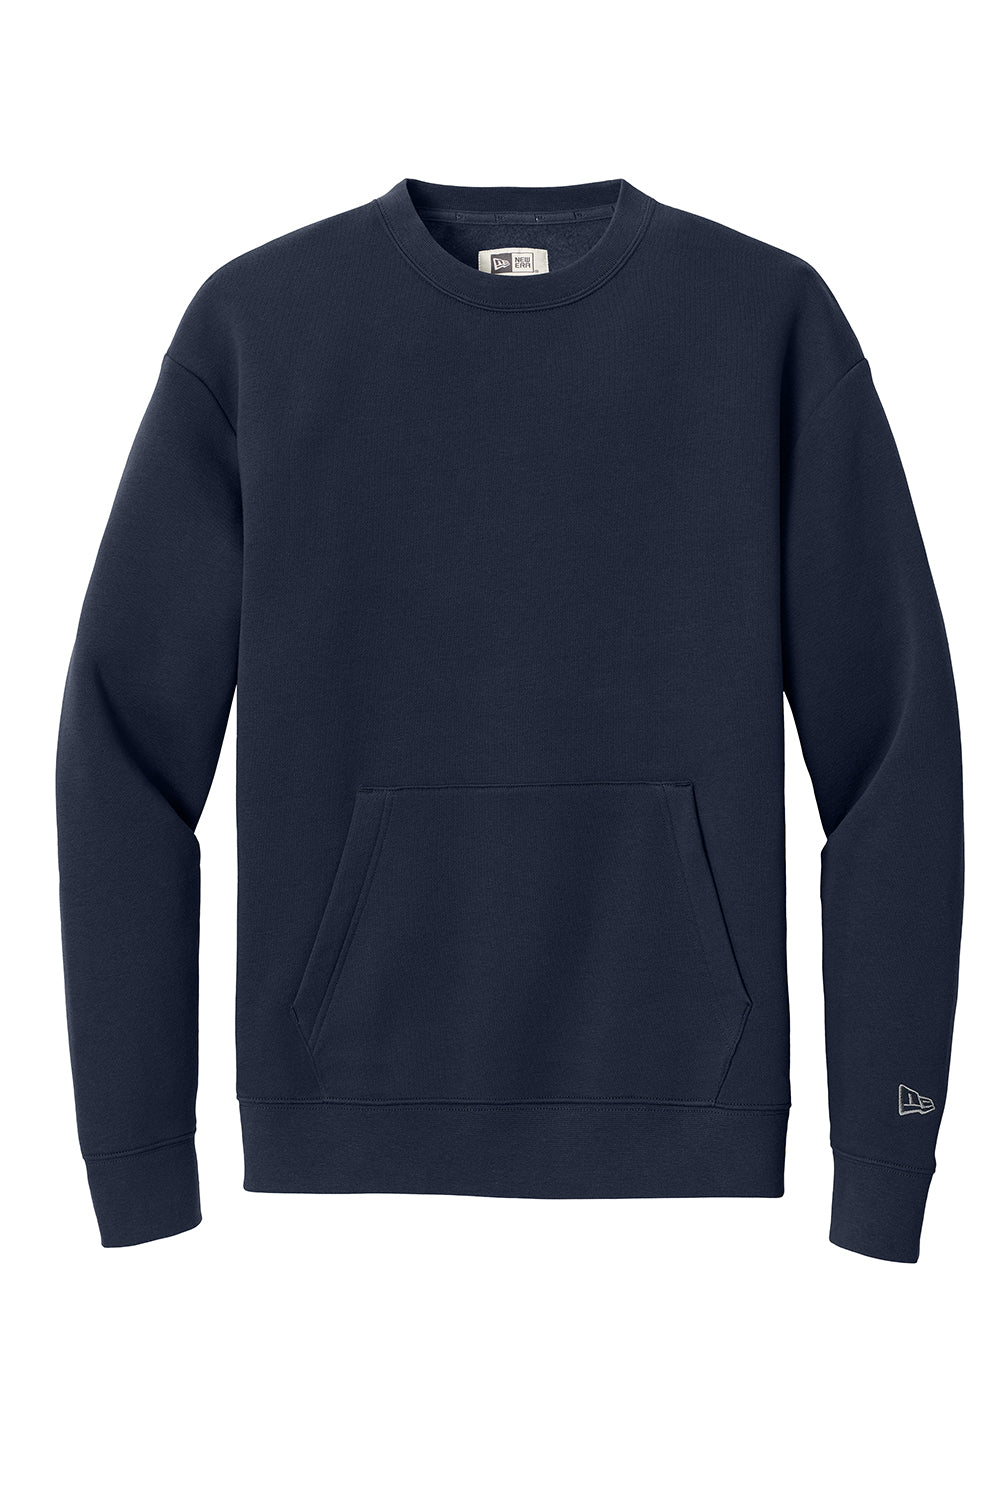 New Era NEA527 Mens Heritage Fleece Crewneck Sweatshirt w/ Pocket True Navy Blue Flat Front